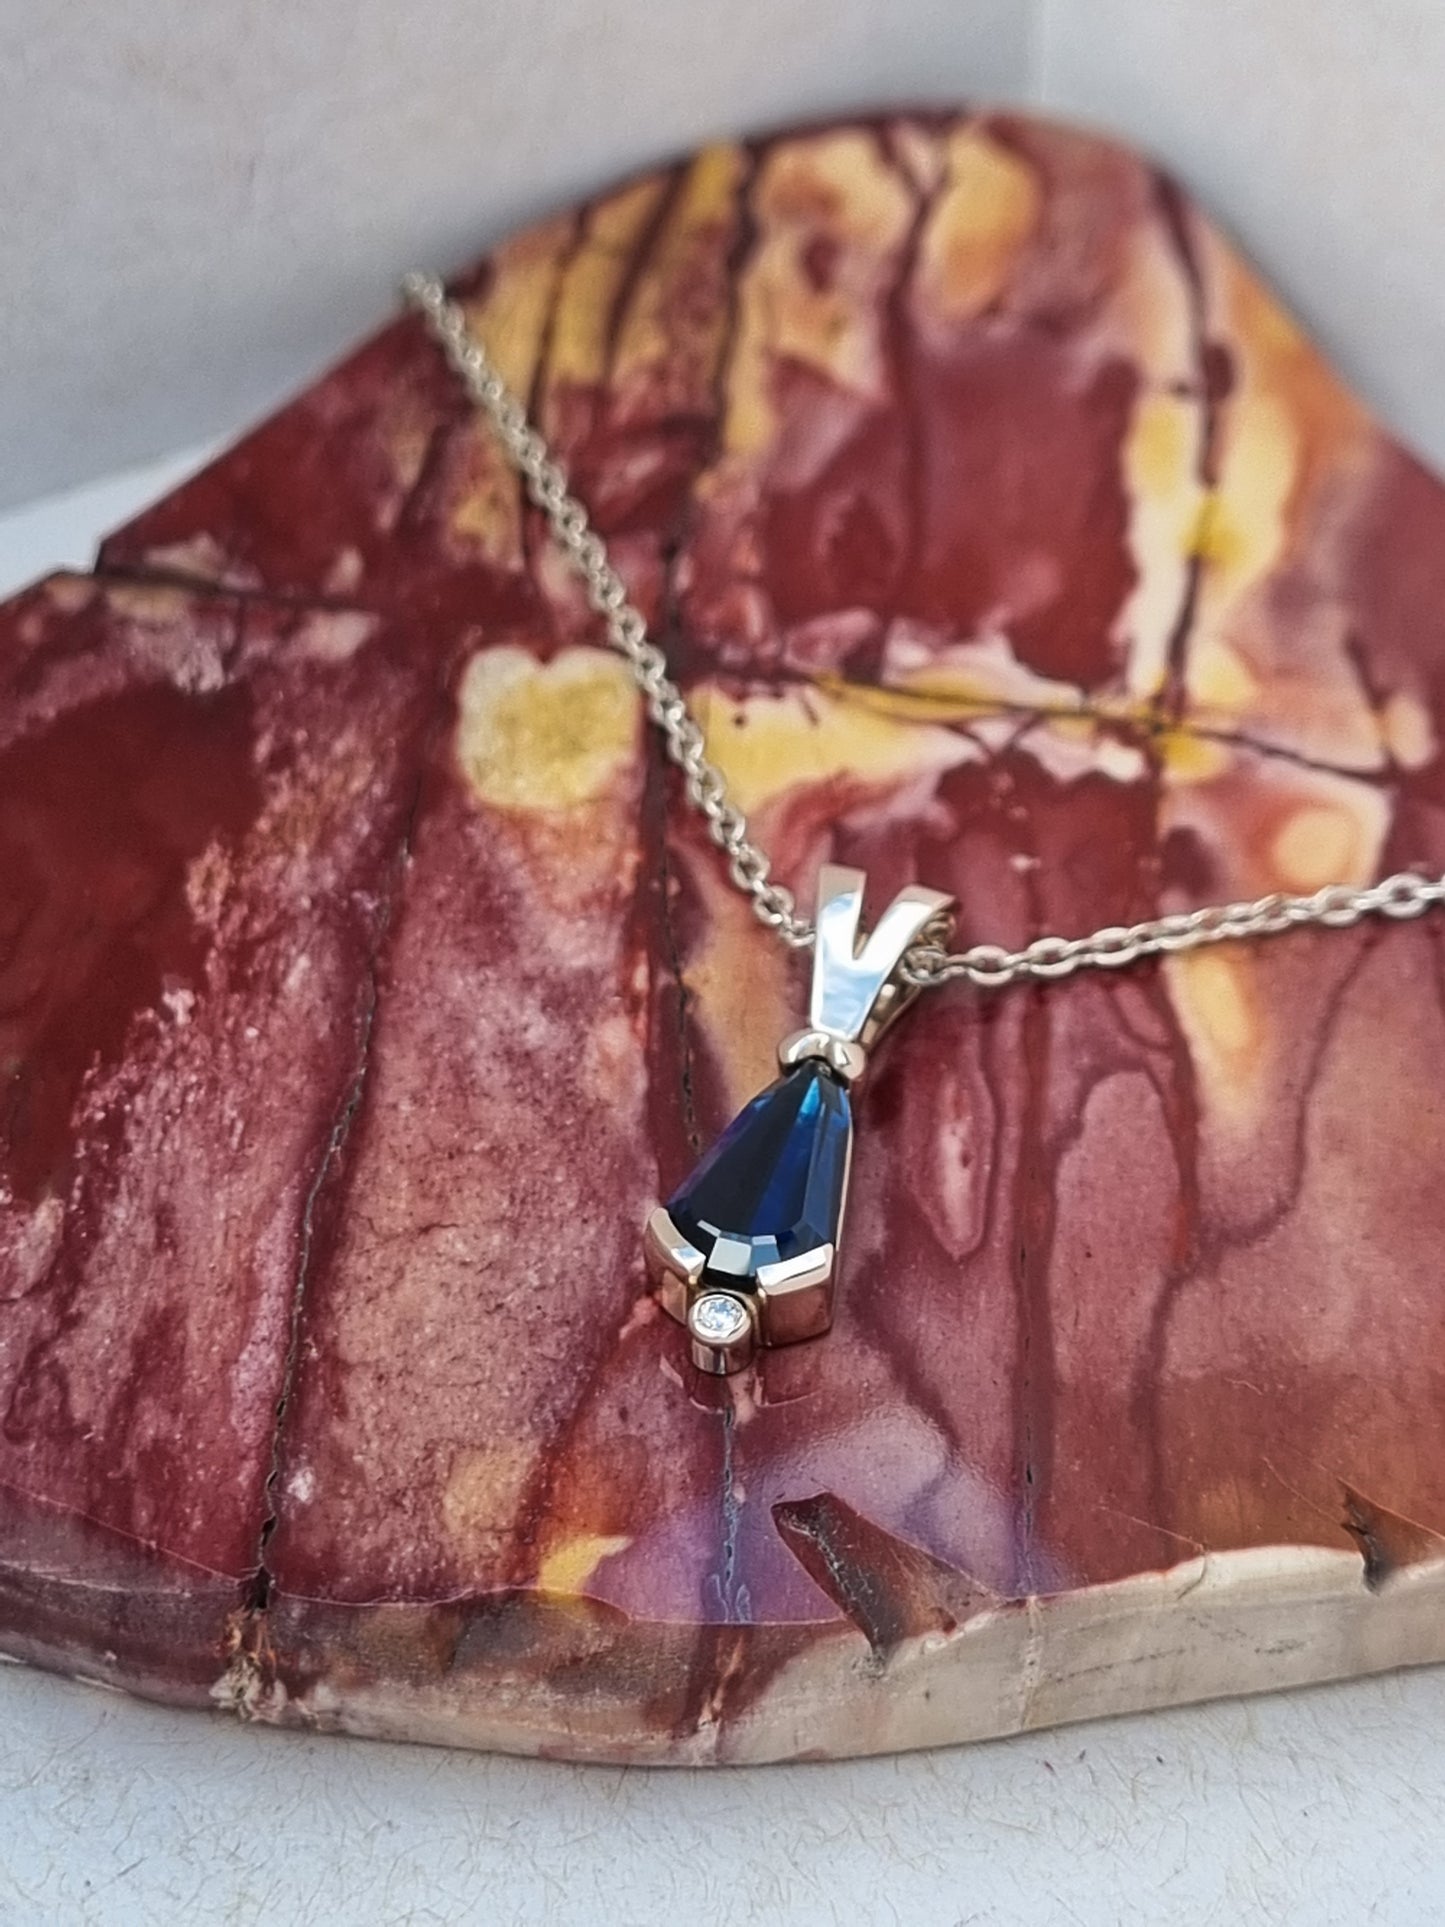 Freeform Pendulum Blue Sapphire & Diamond Pendant